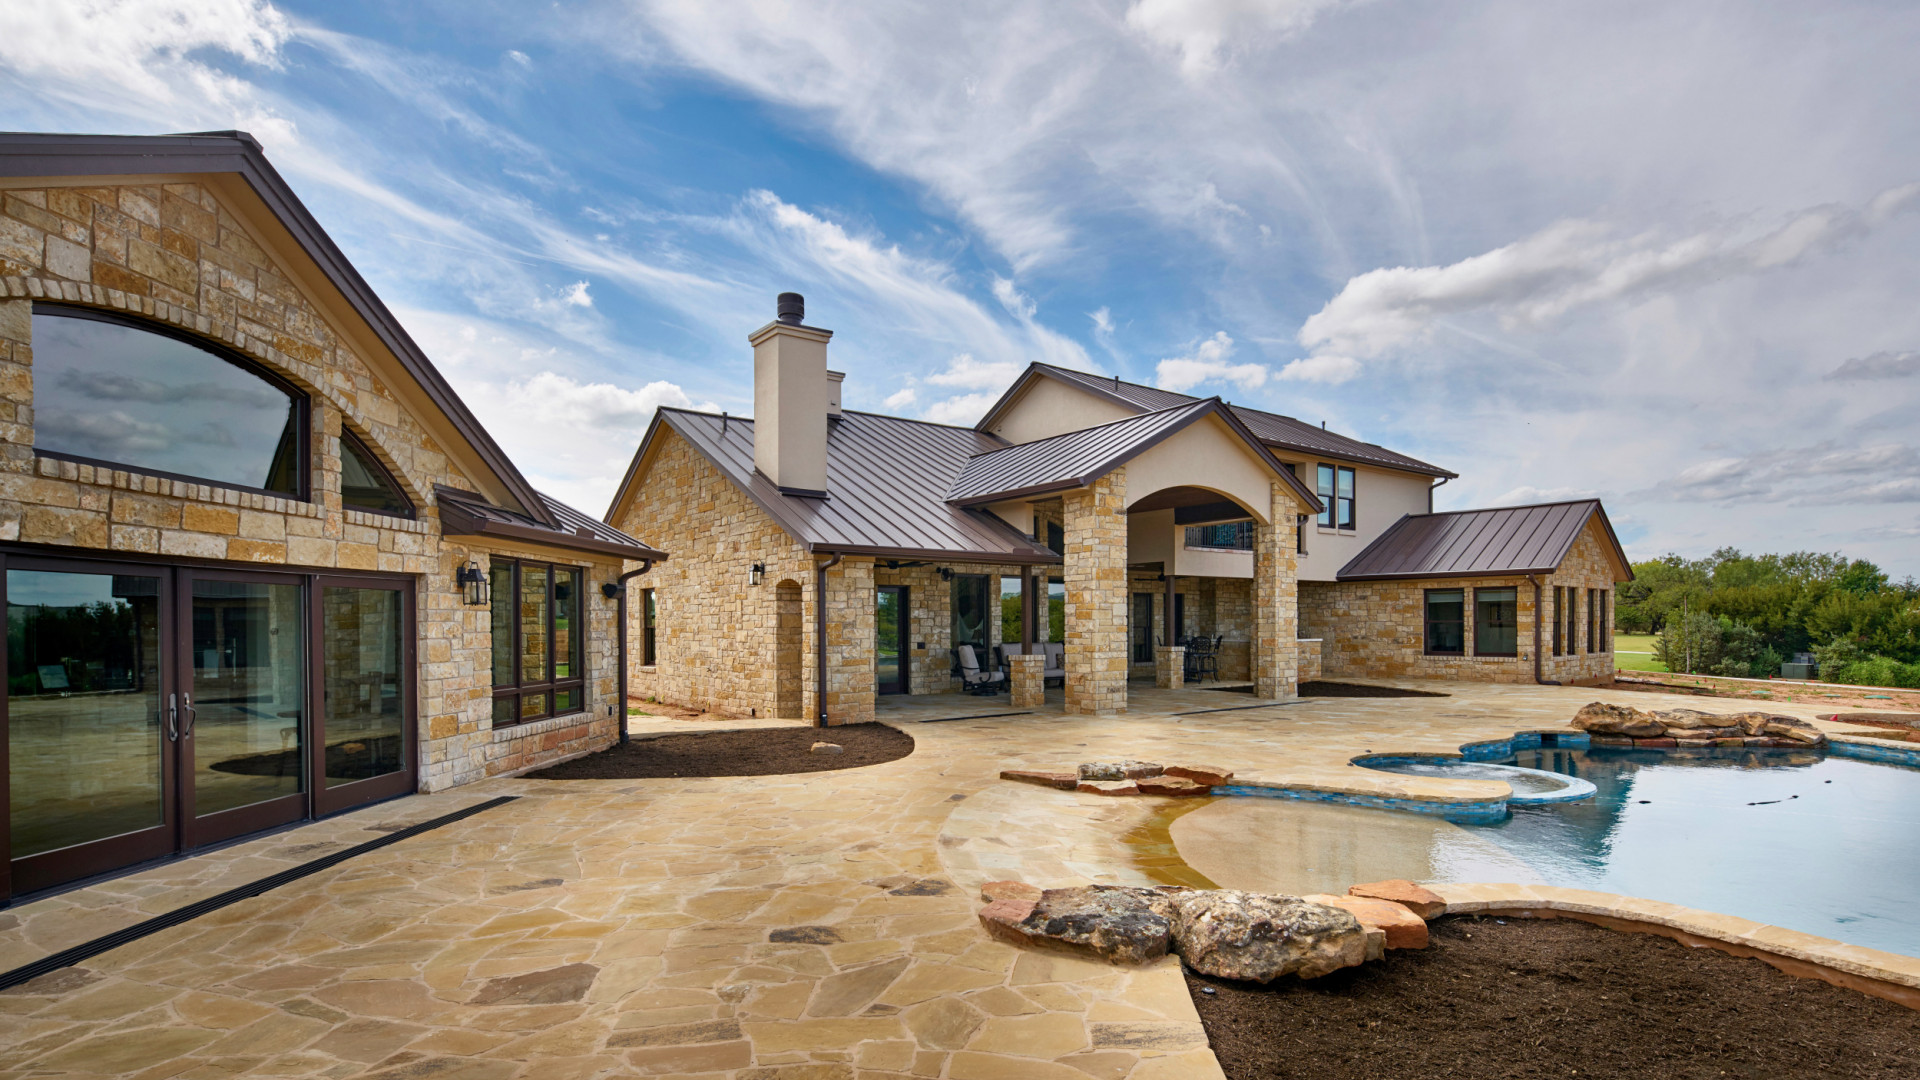 Lakeside stone luxury home boasting a zero entry pool and private dock, Lake LBJ TX